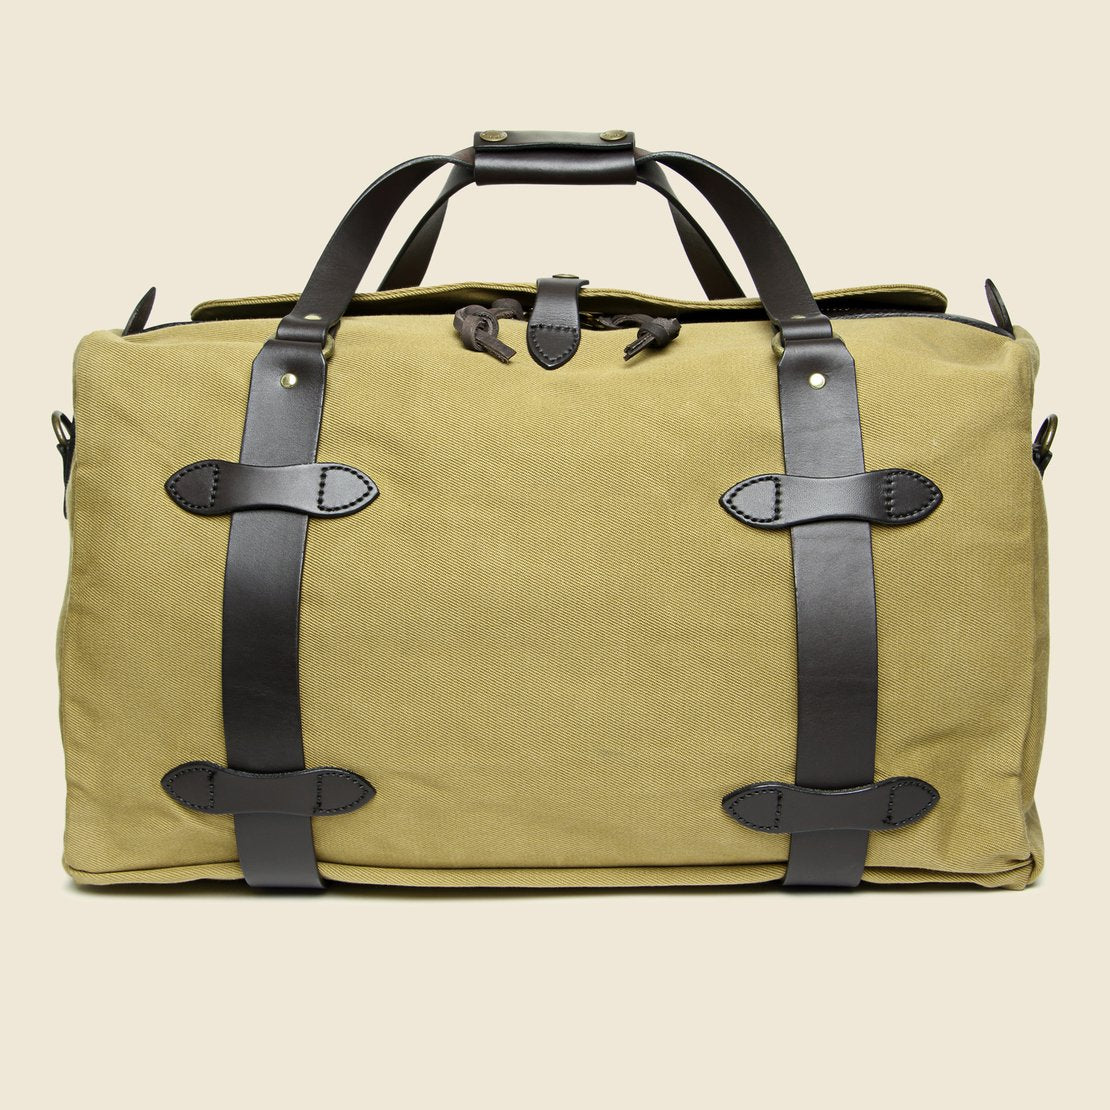 Medium Carry On Duffle Bag - Tan